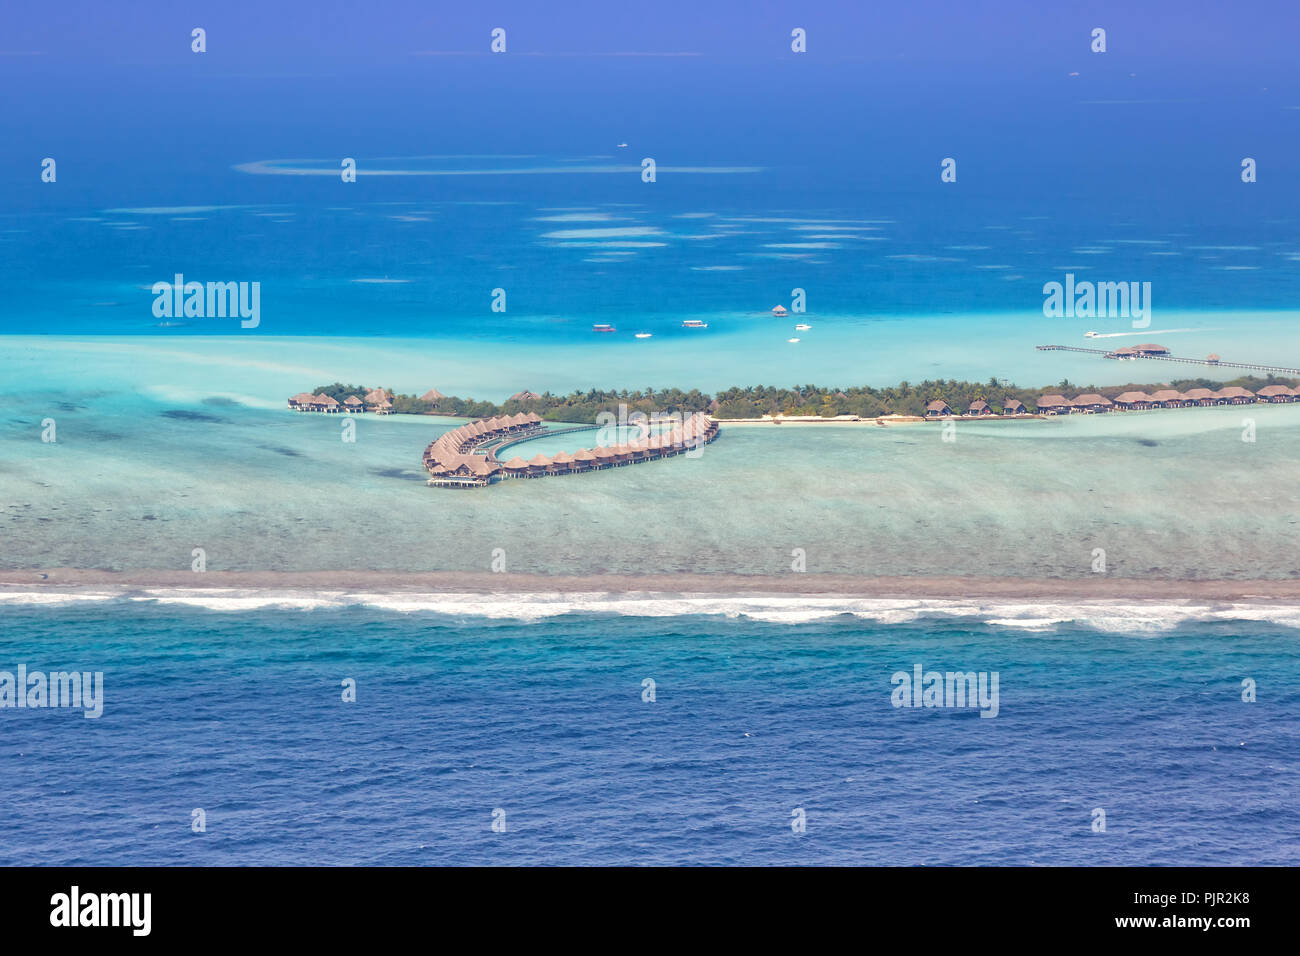 Maldives vacation paradise sea copyspace Emboodhu Finolhu island Resort aerial photo tourism Stock Photo